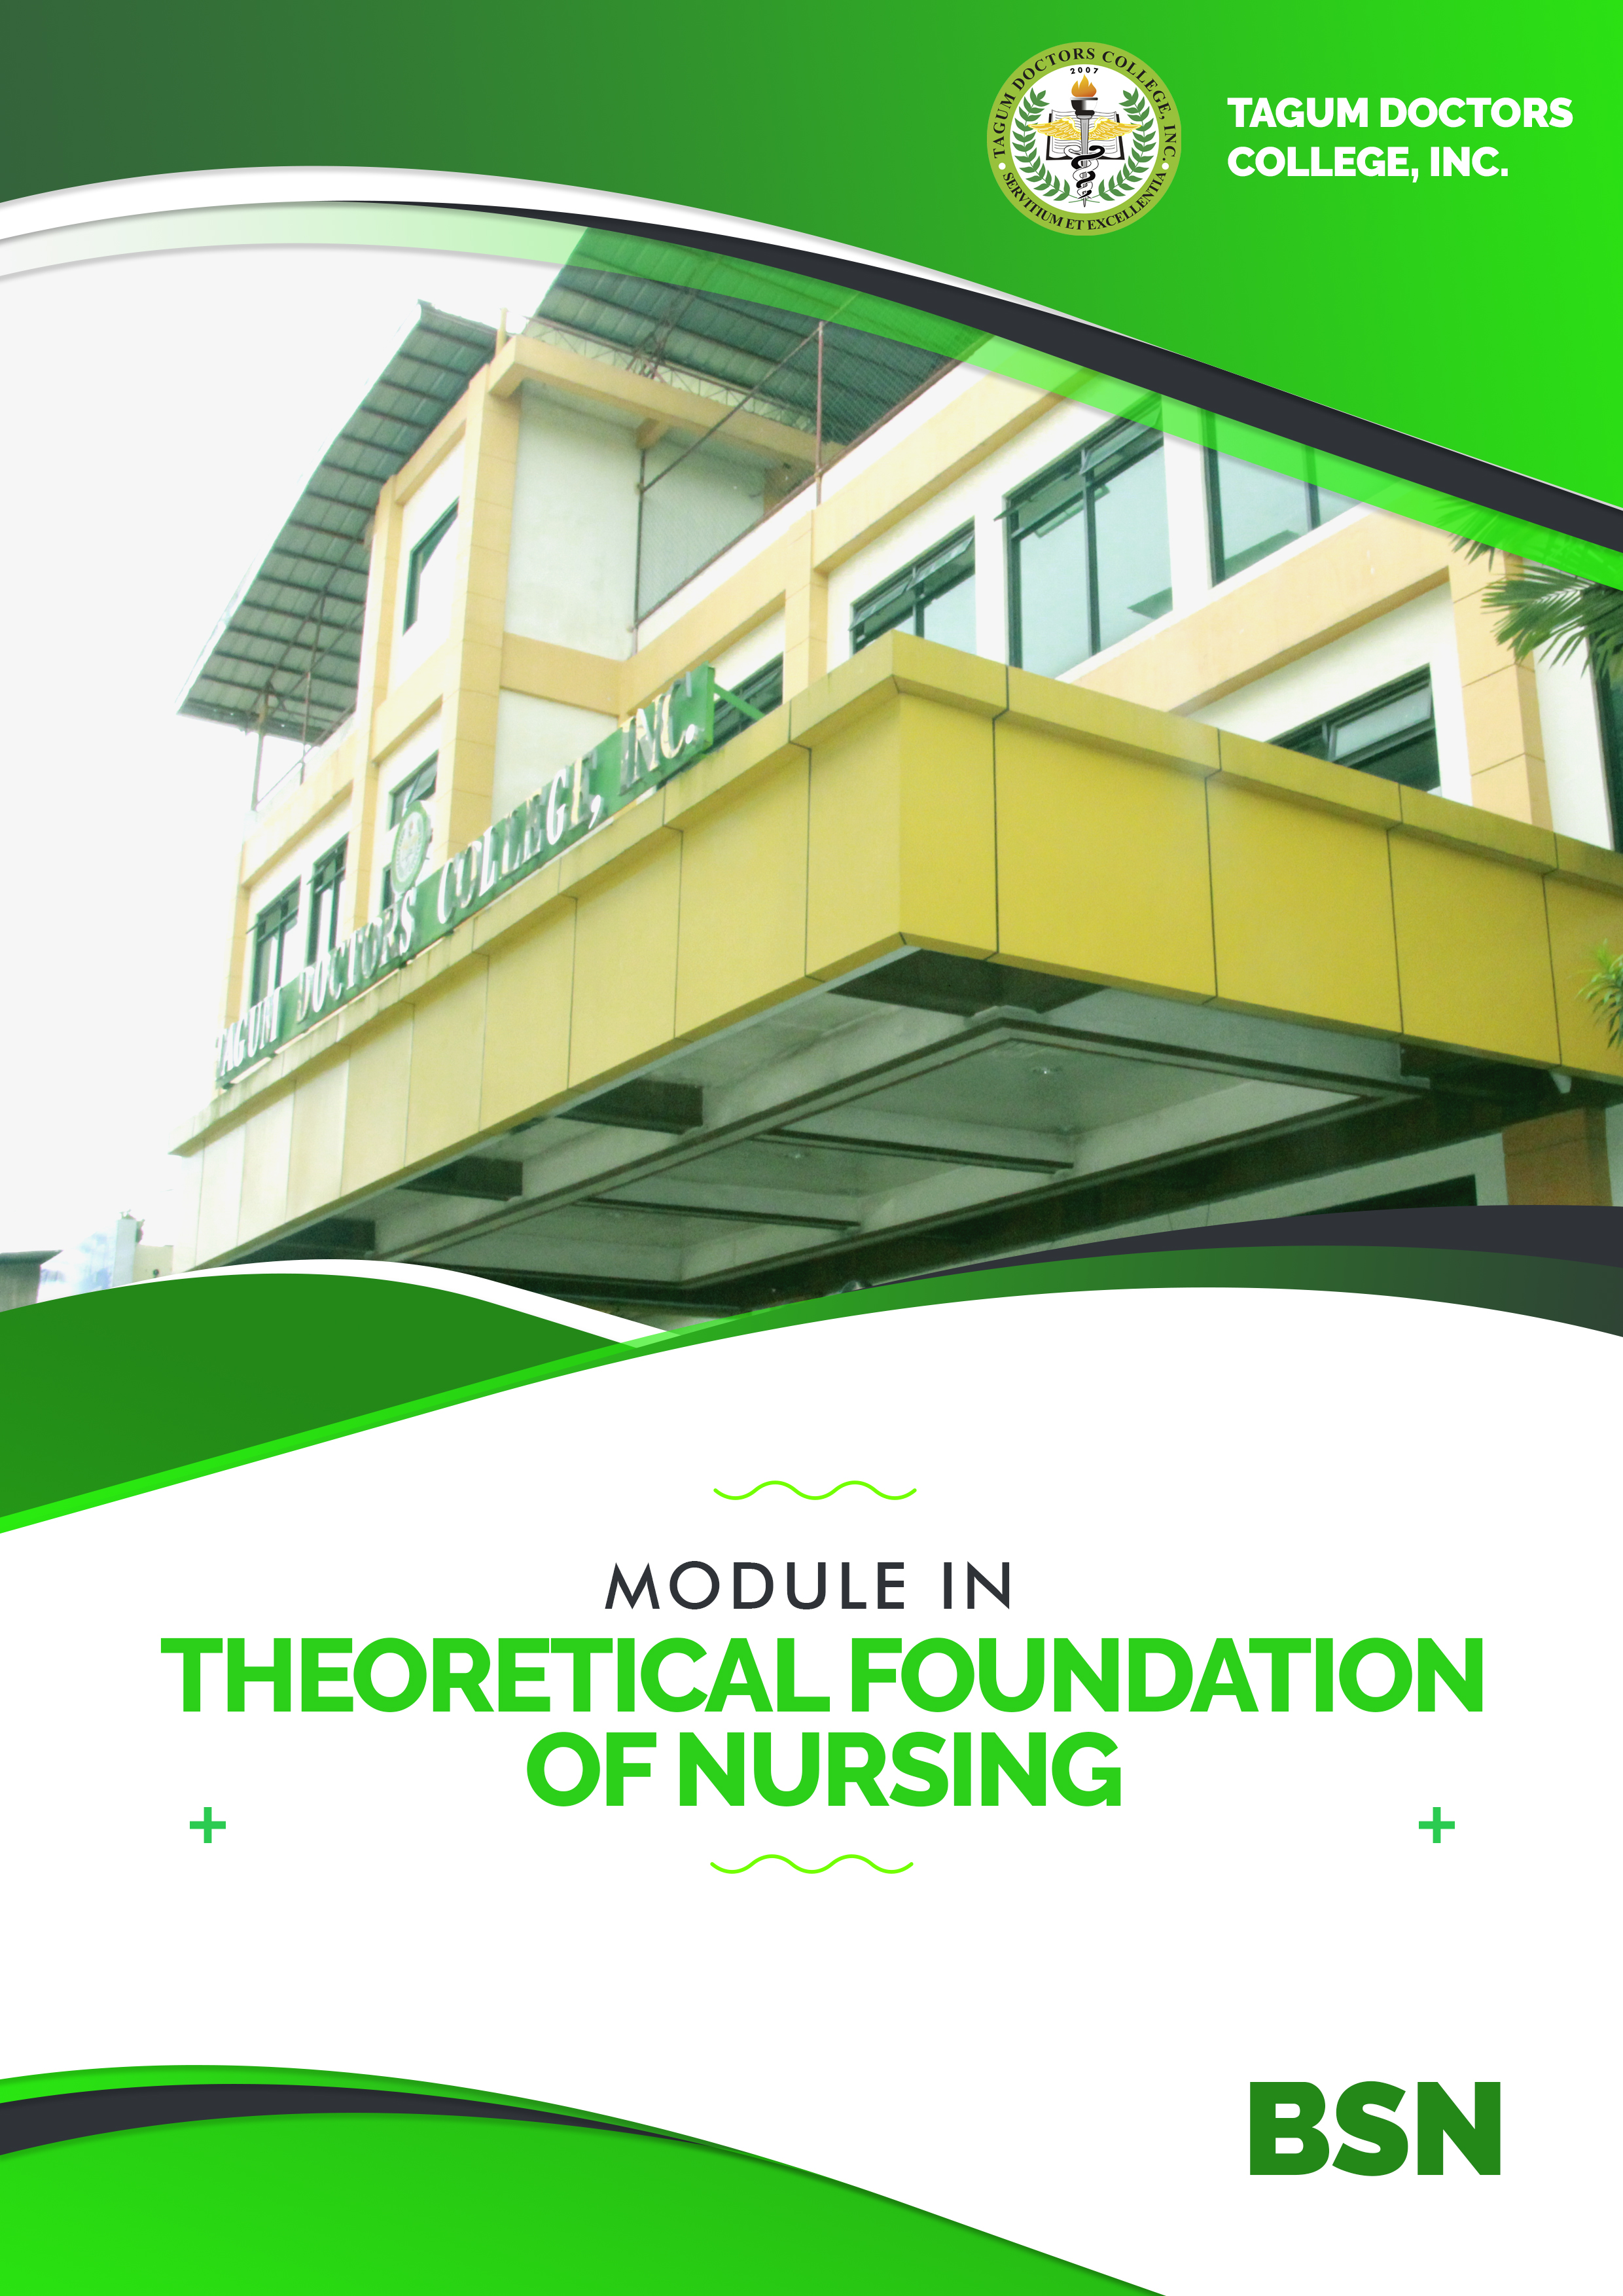 Theoretical Foundations of Nursing - BSN 1-C